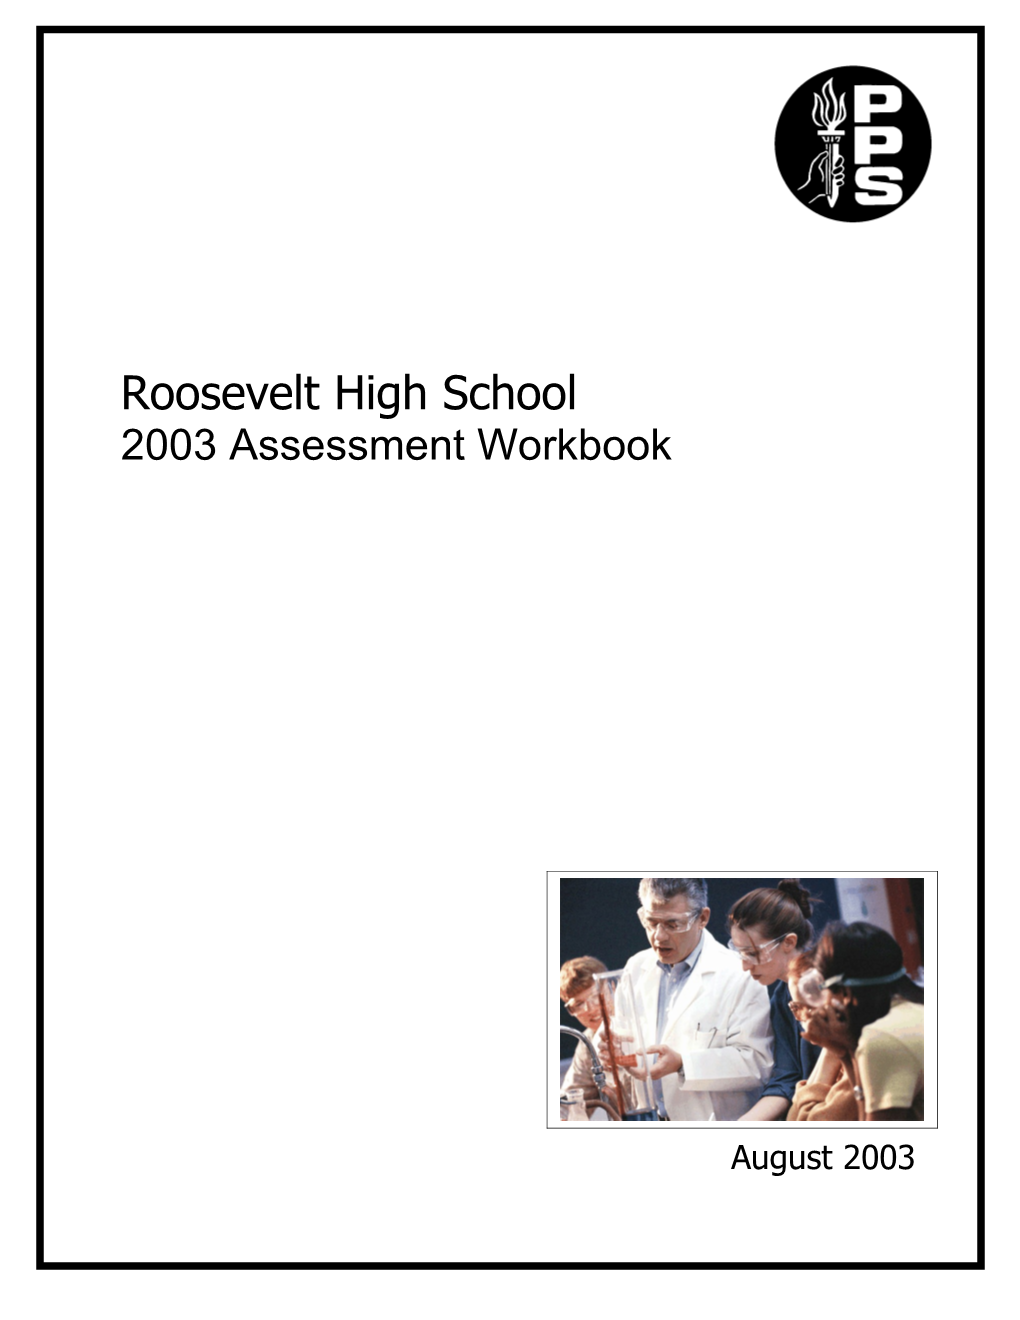 2003 Assessment Workbook